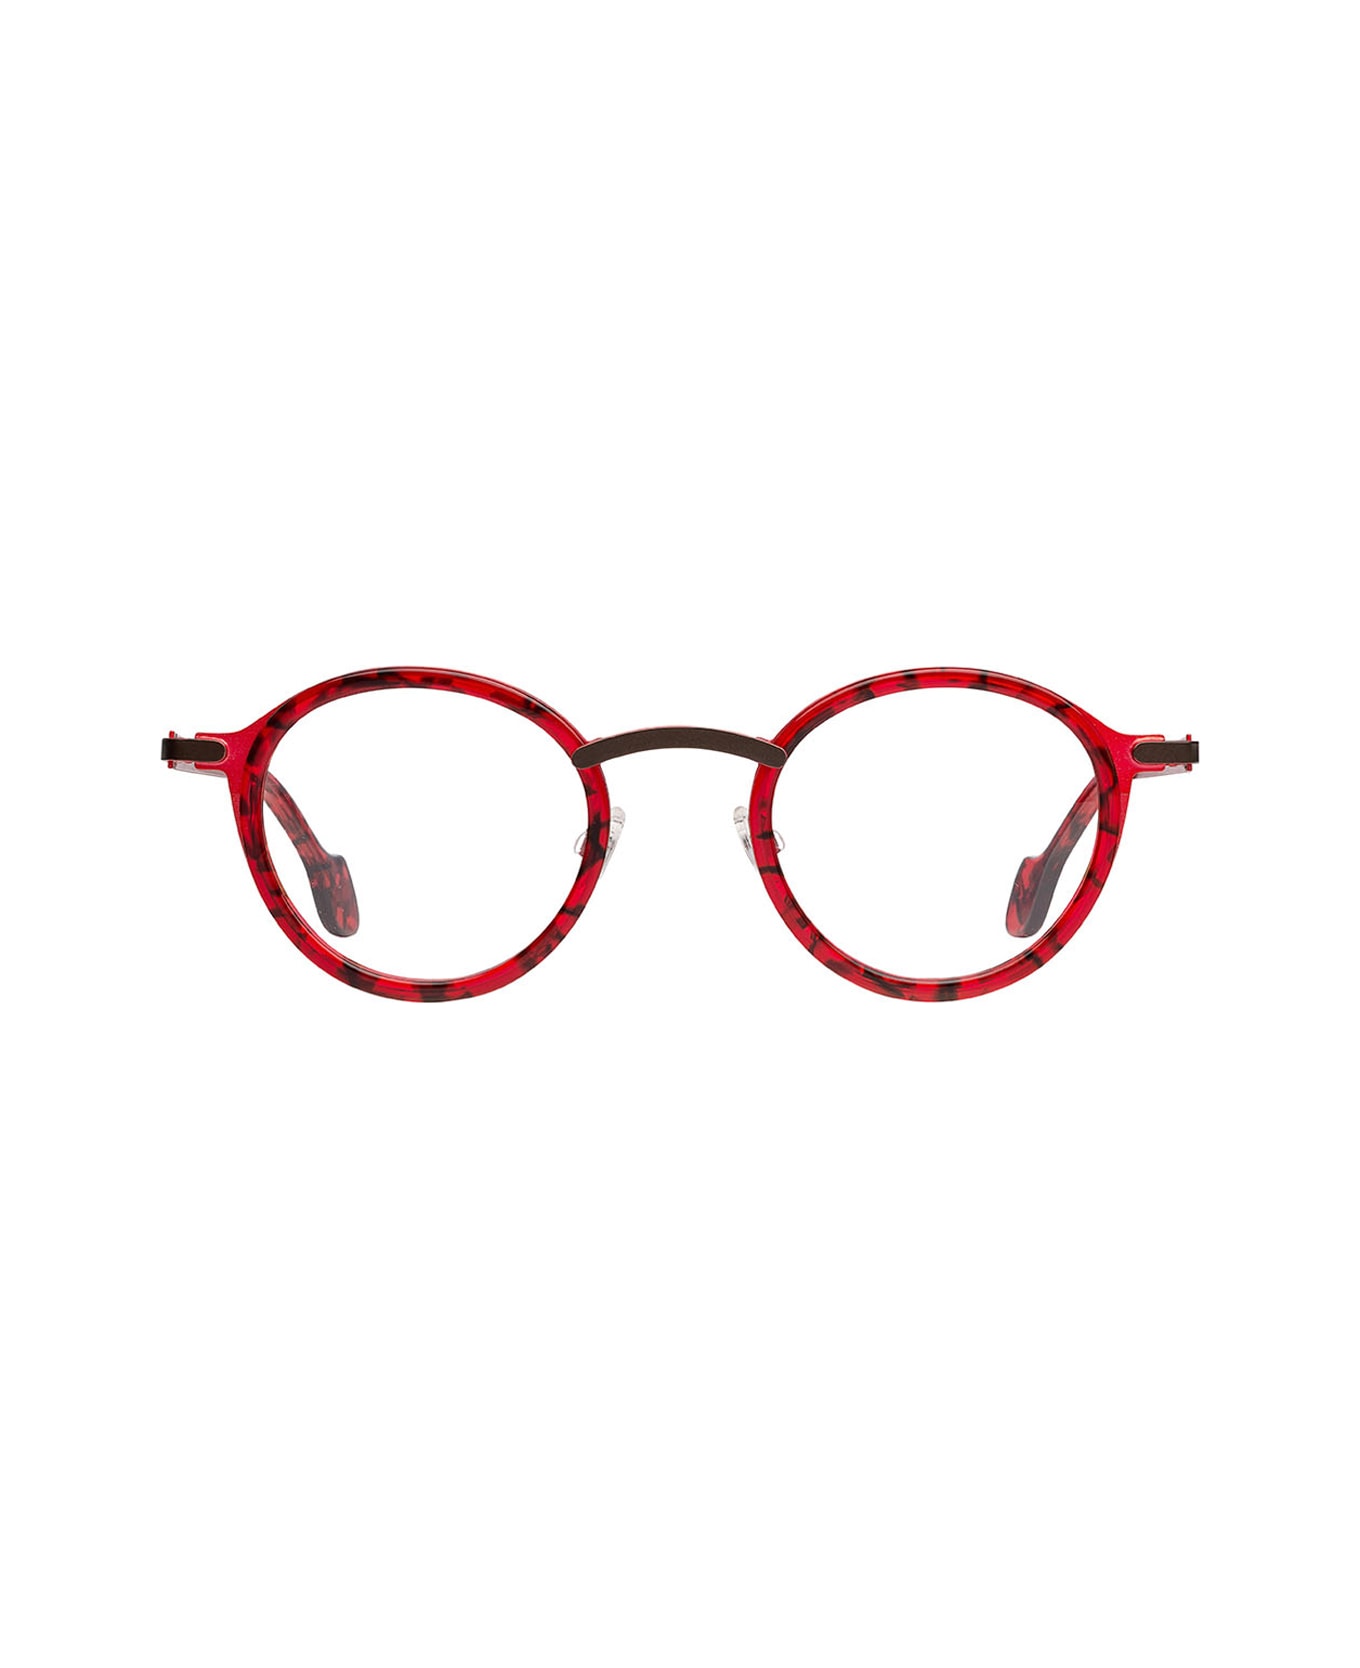 Matttew Waza 58 Glasses - Rosso アイウェア